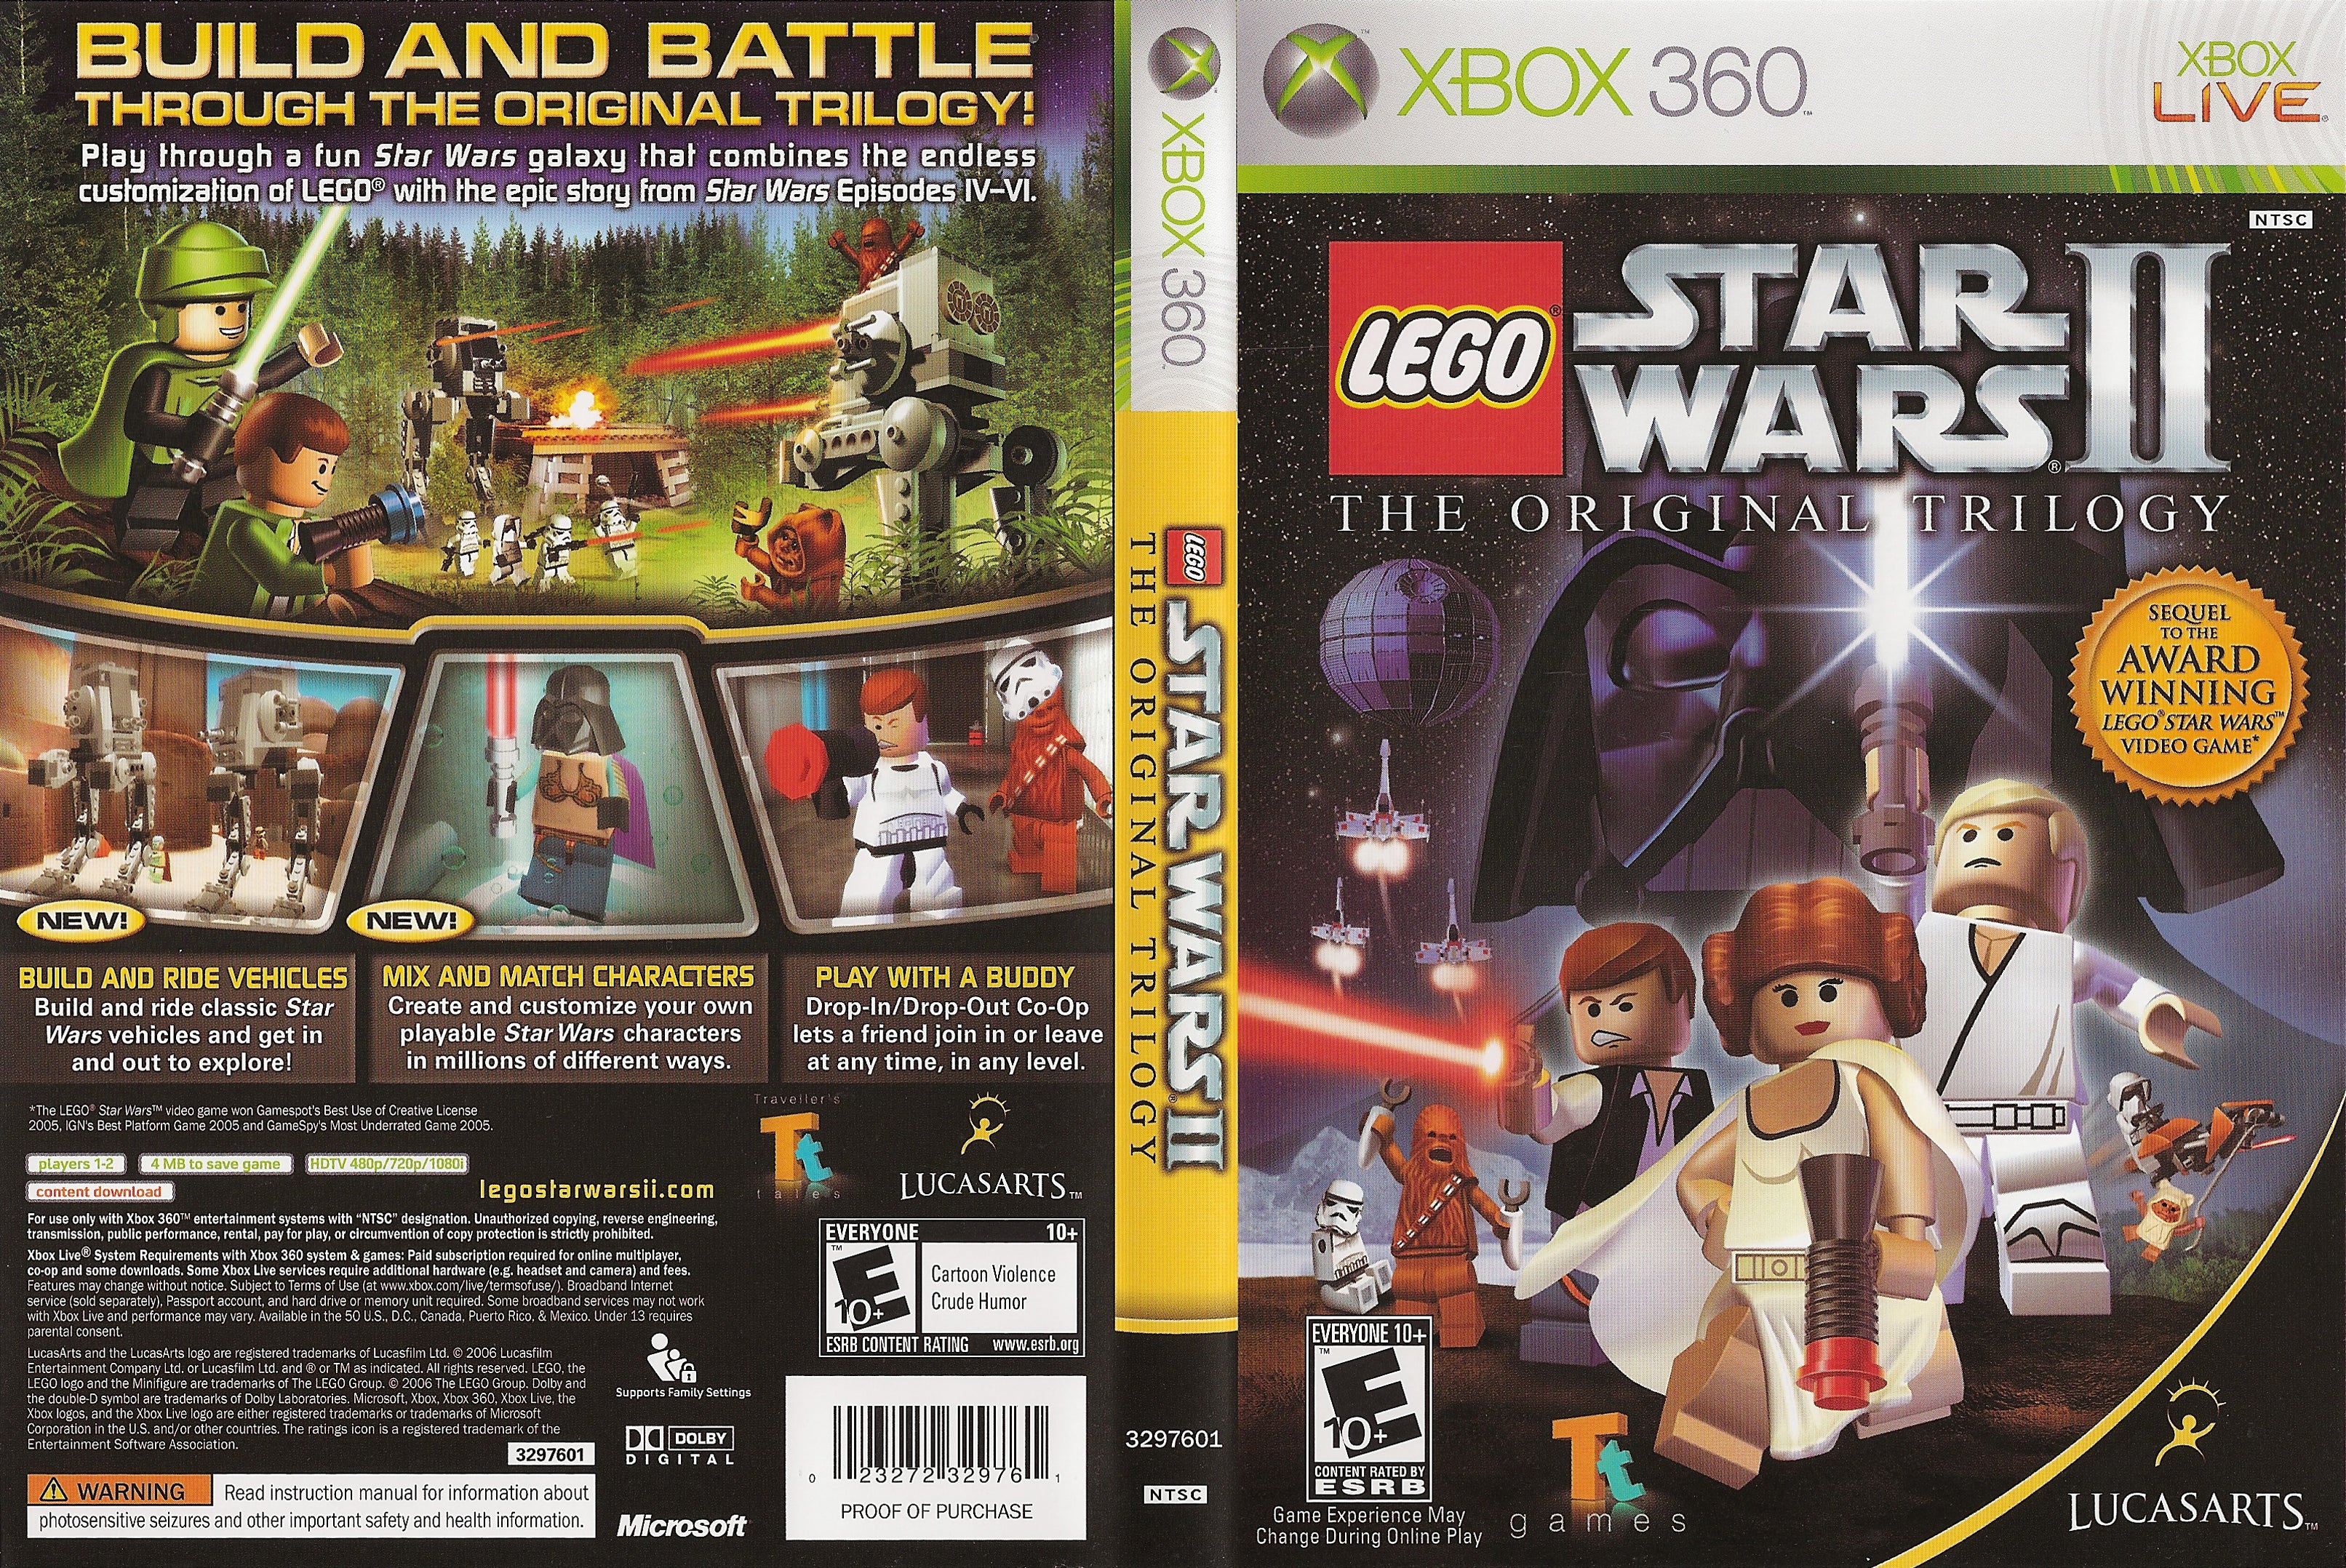  Lego Star Wars II: The Original Trilogy - Xbox 360 : Video Games